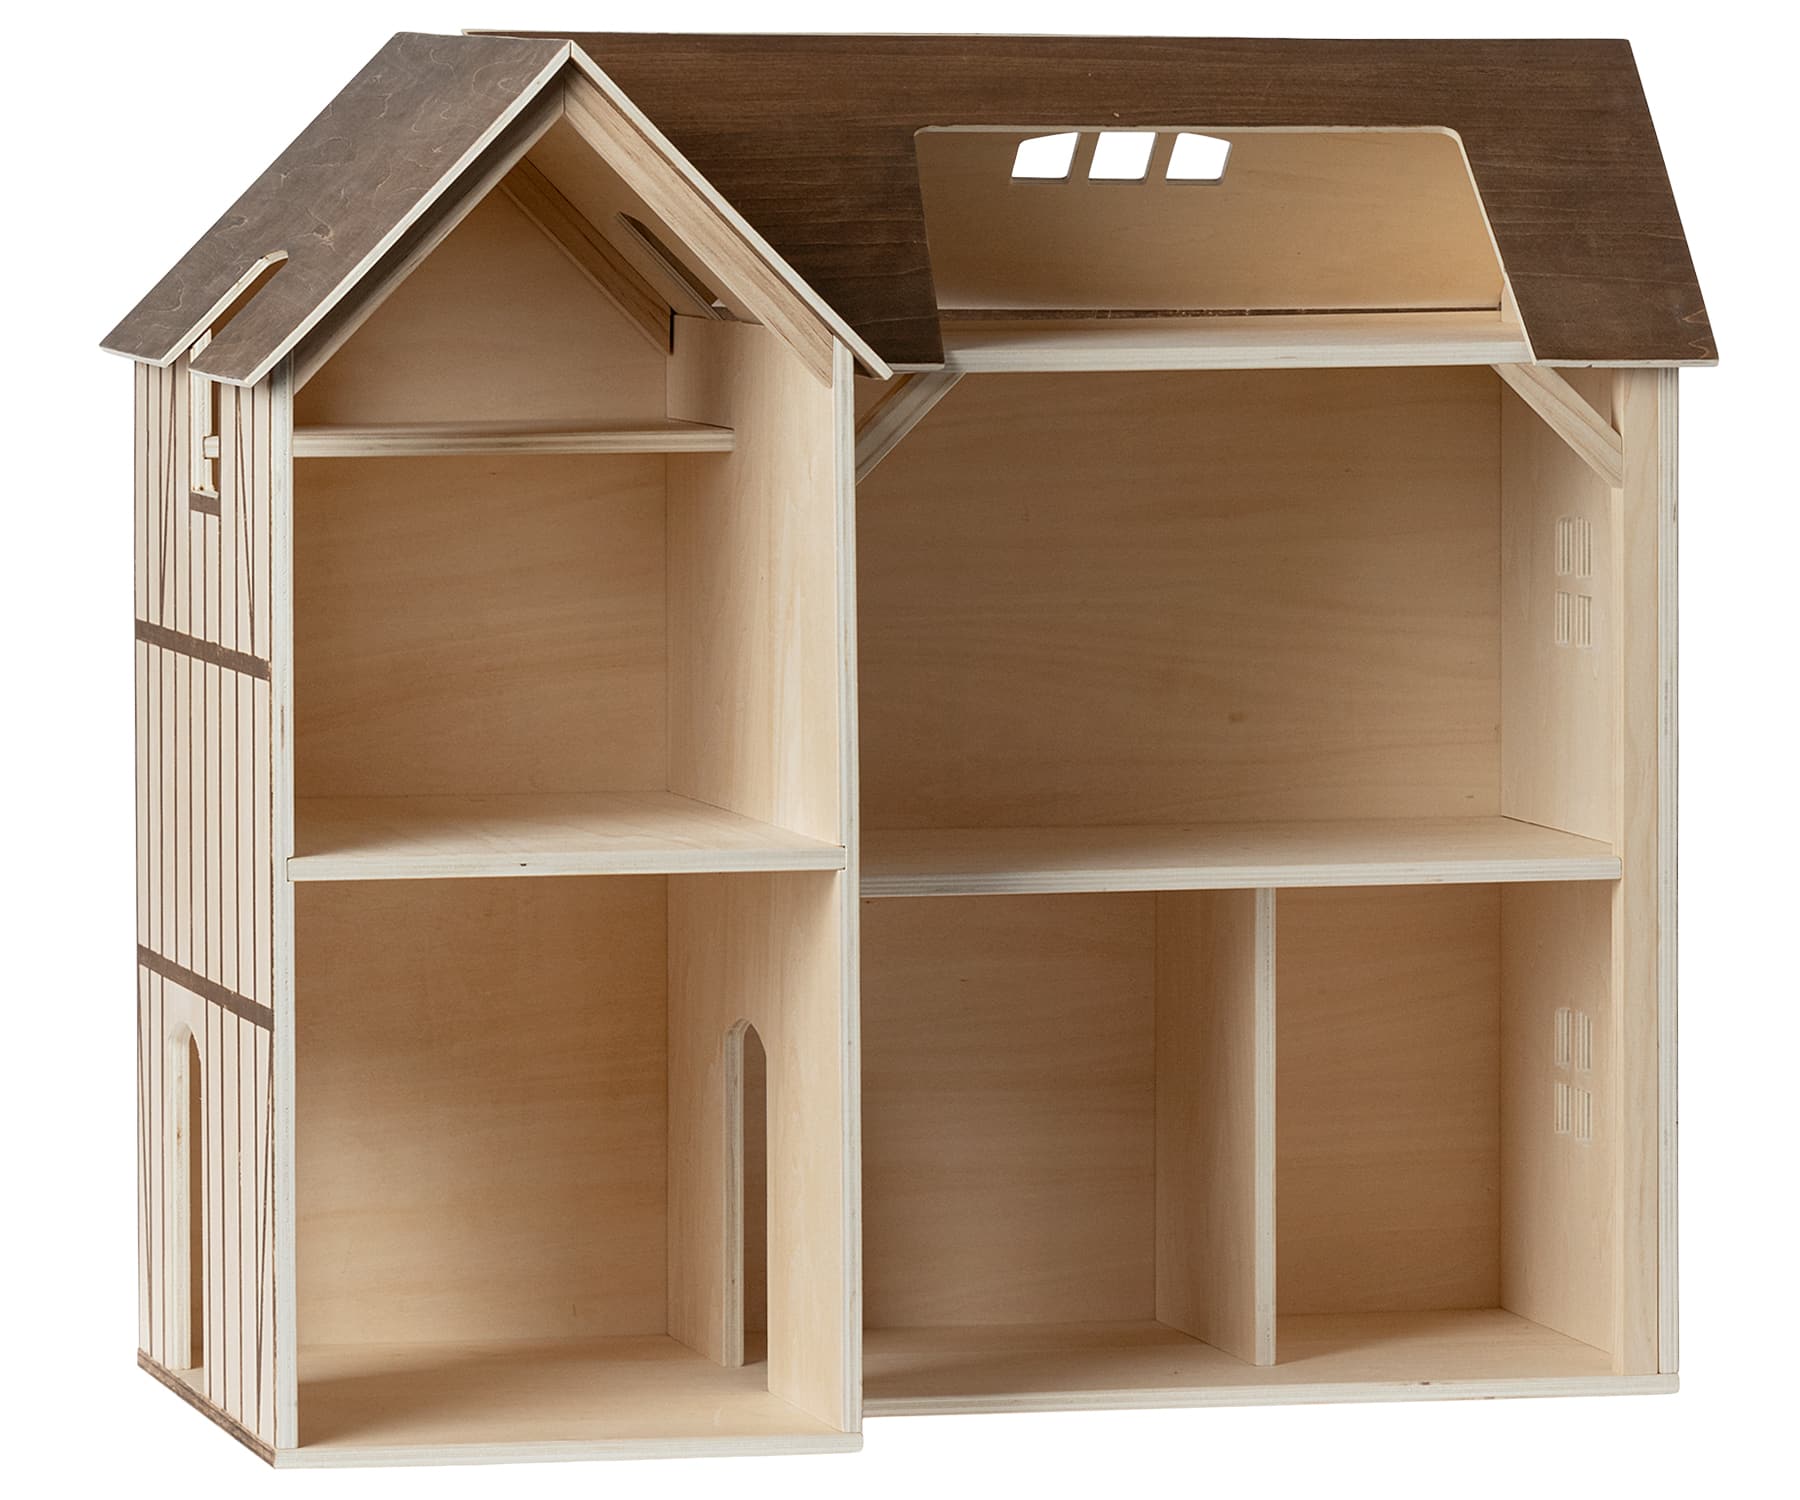 Maileg: drewniany domek dla myszek Mouse Hole Farmhouse